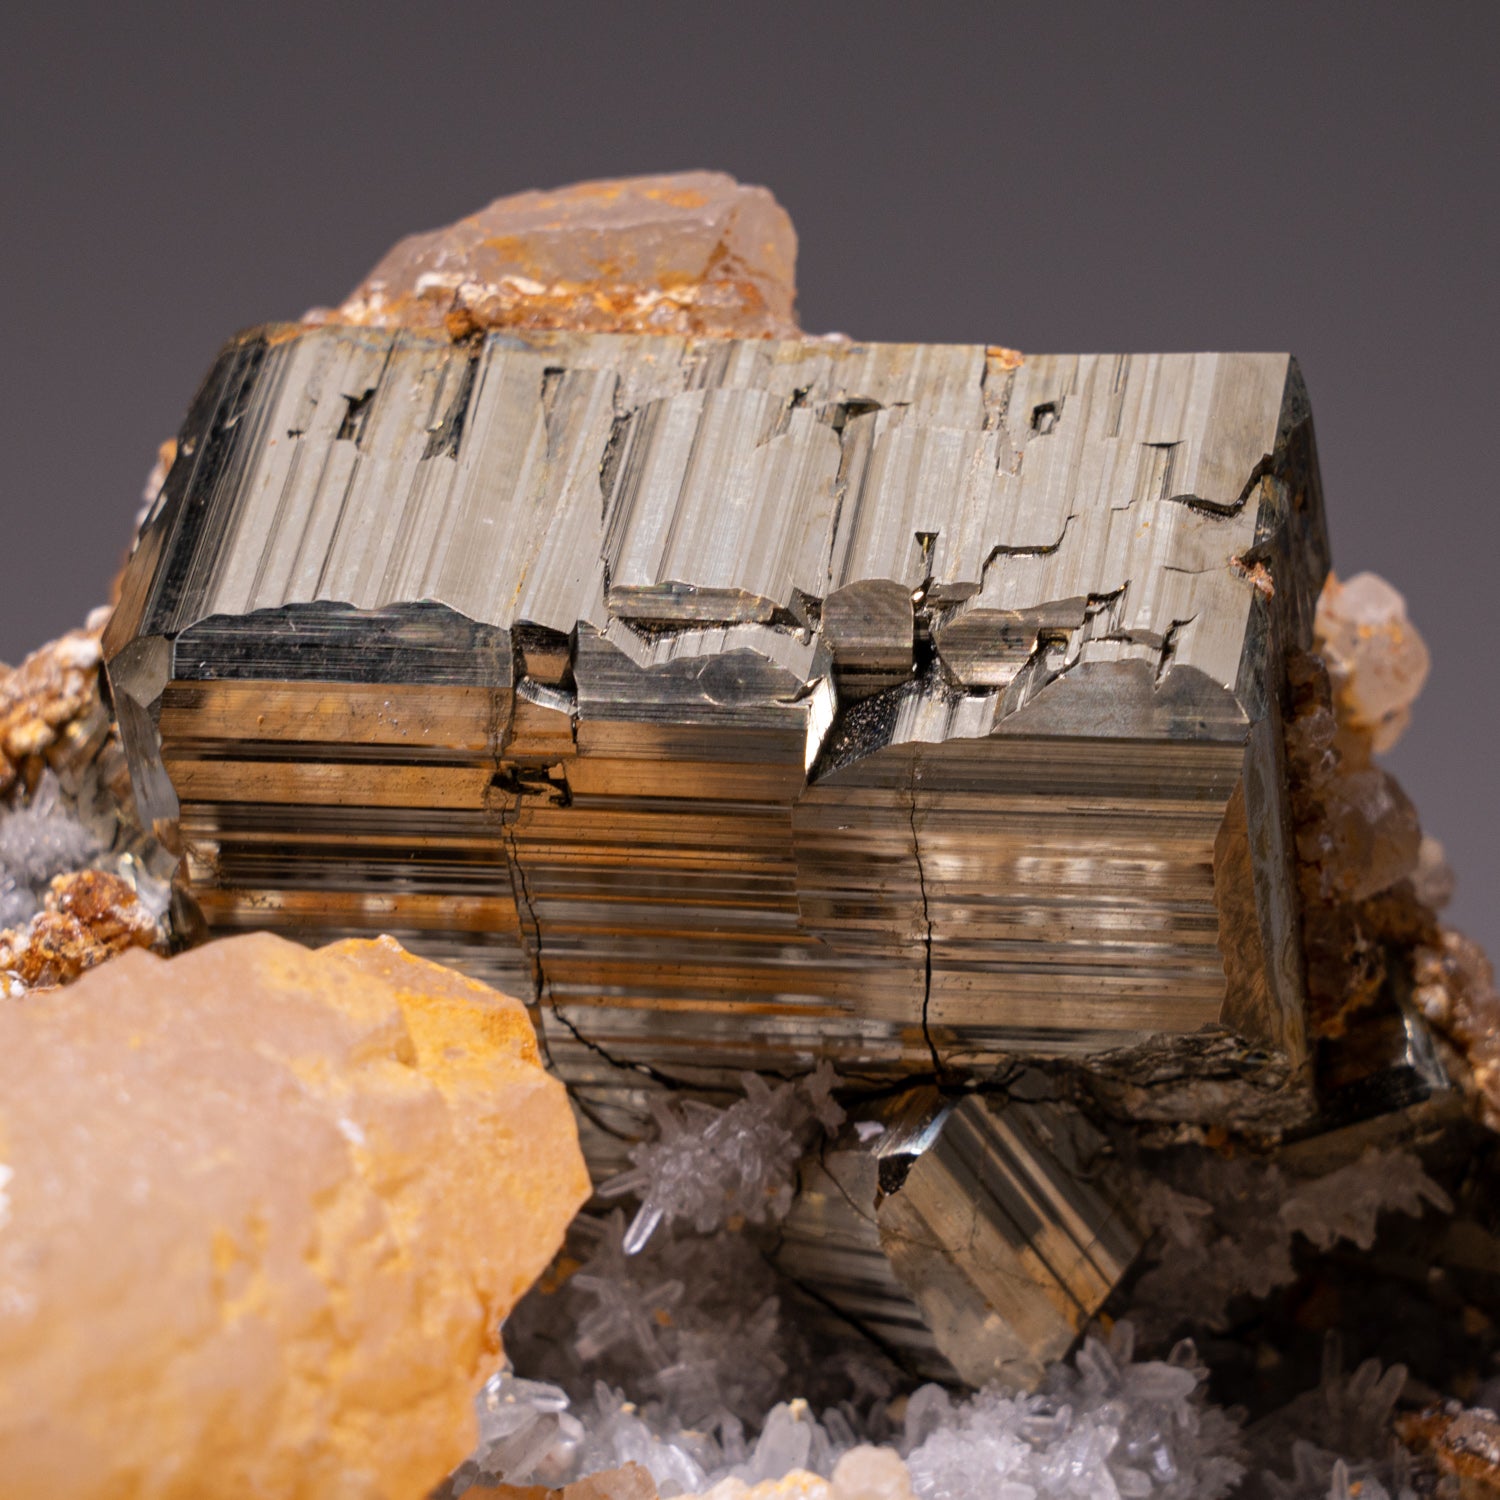 Calcite on Pyrite with Quartz from Huaron District, Cerro de Pasco Province, Pasco Department, Peru